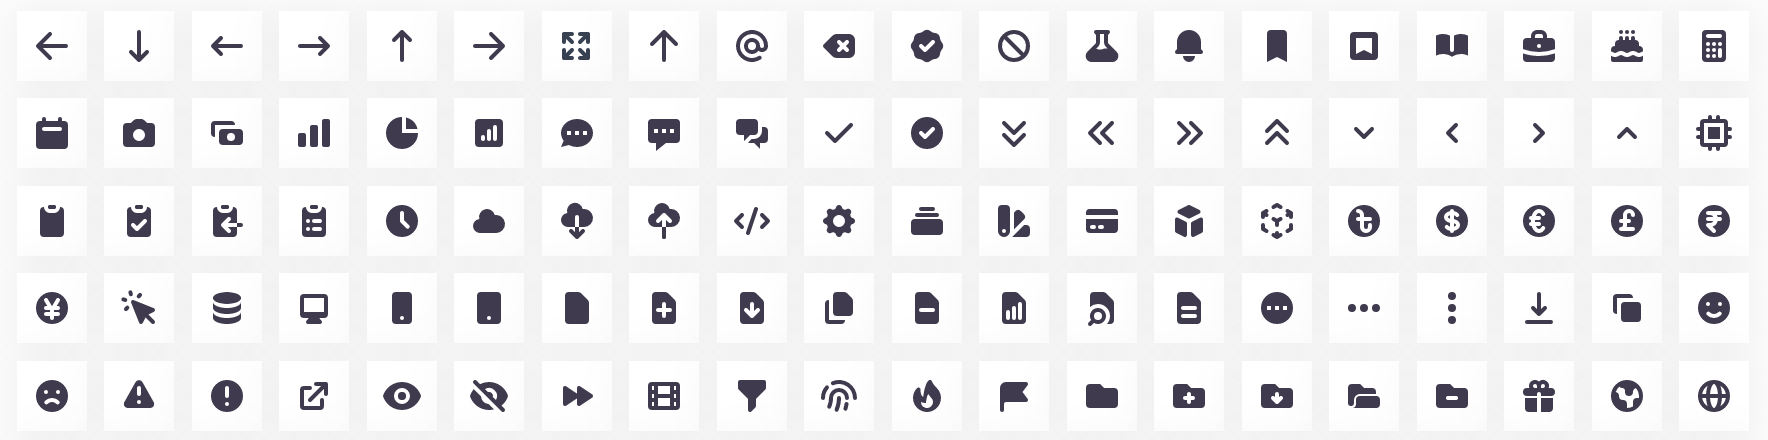 SVG Icons Icon Set